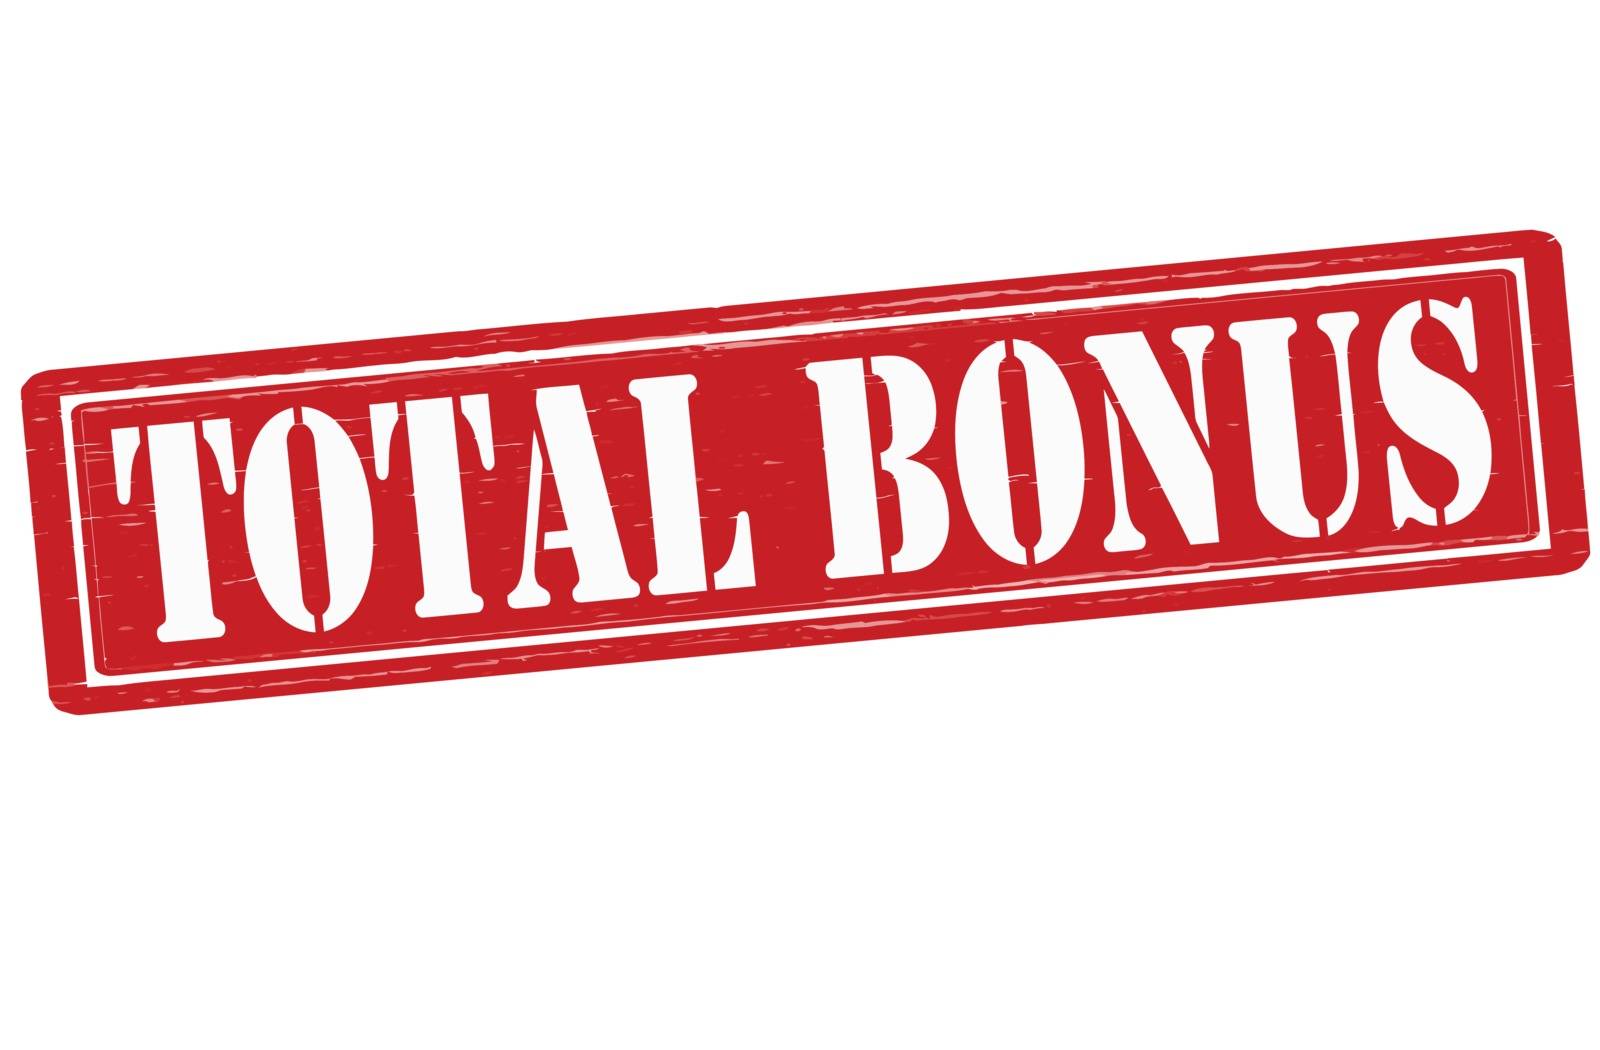 Total bonus by carmenbobo